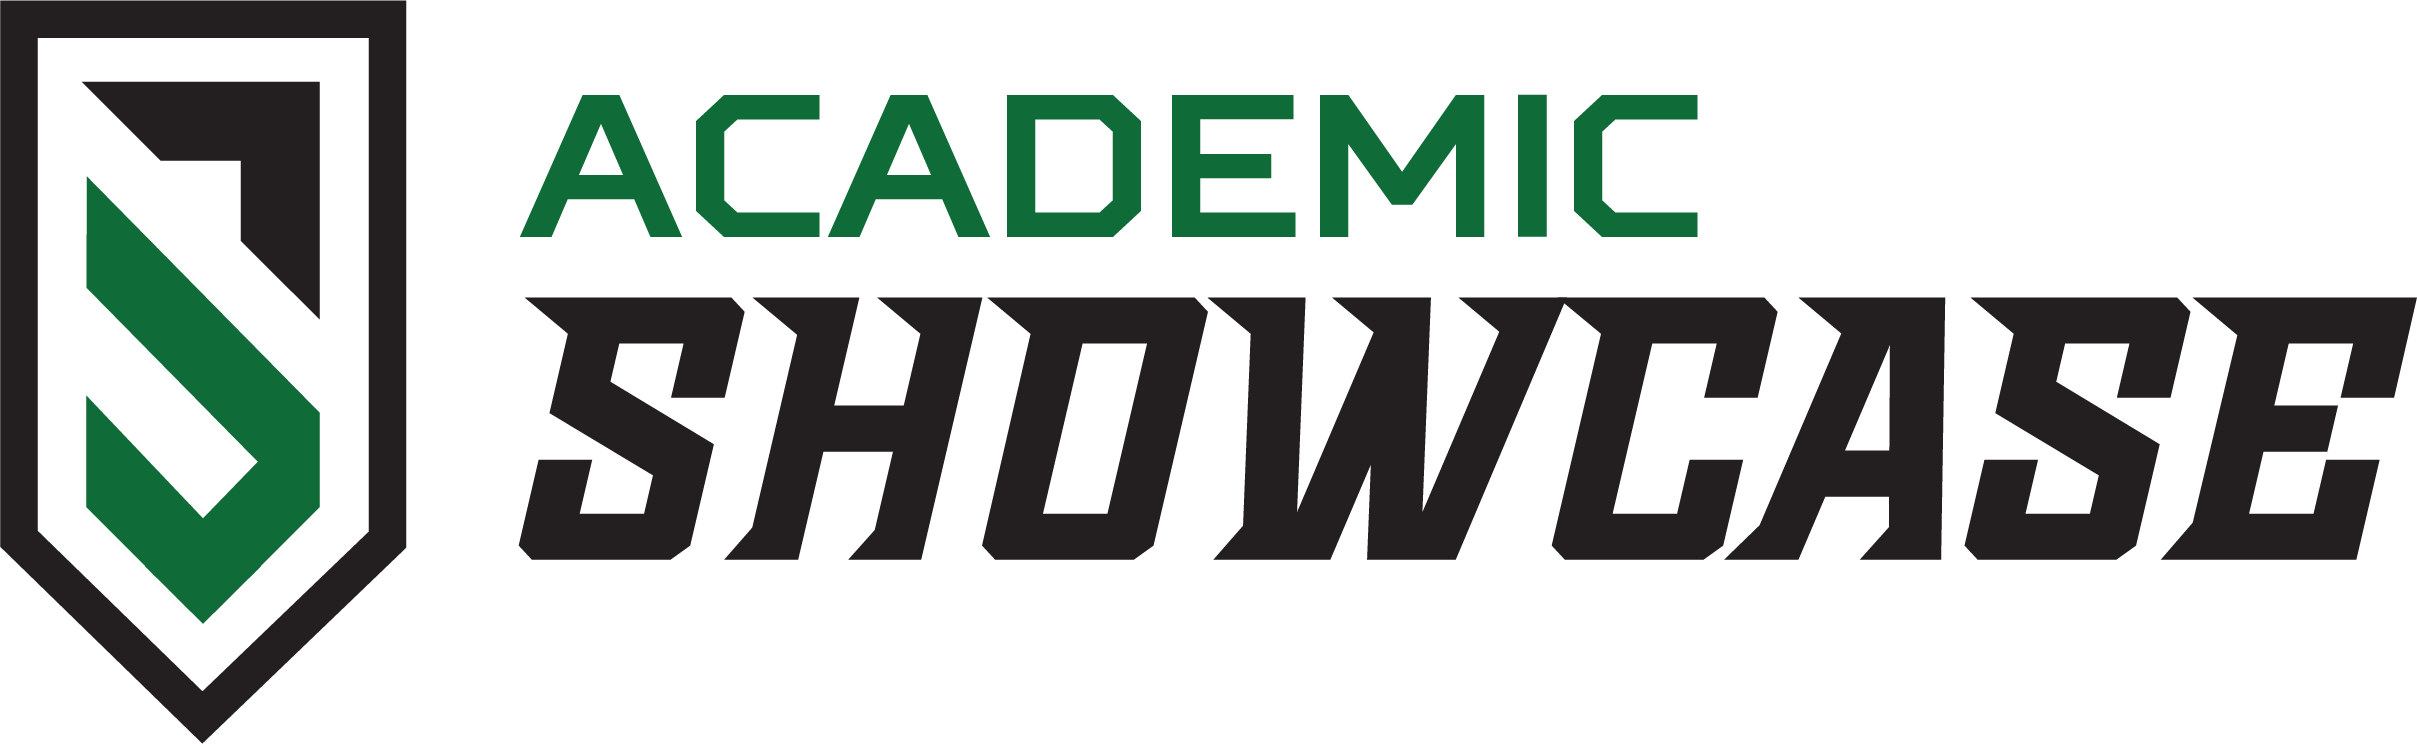 Academic Showcase Logo